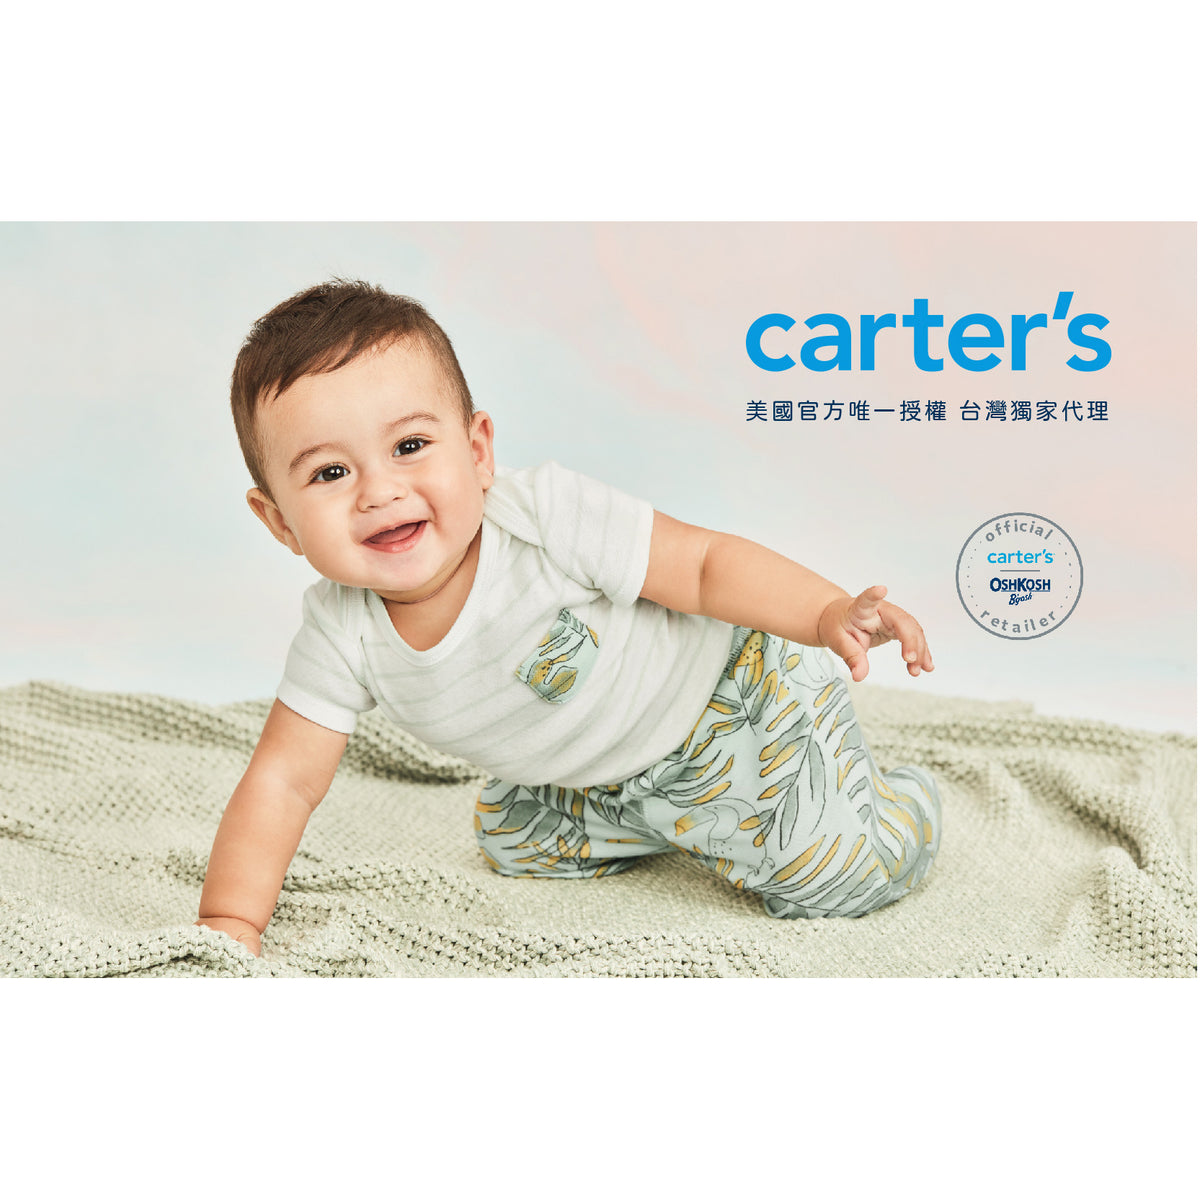 Carter's 懷舊布花無袖綁帶洋裝(6M-24M)